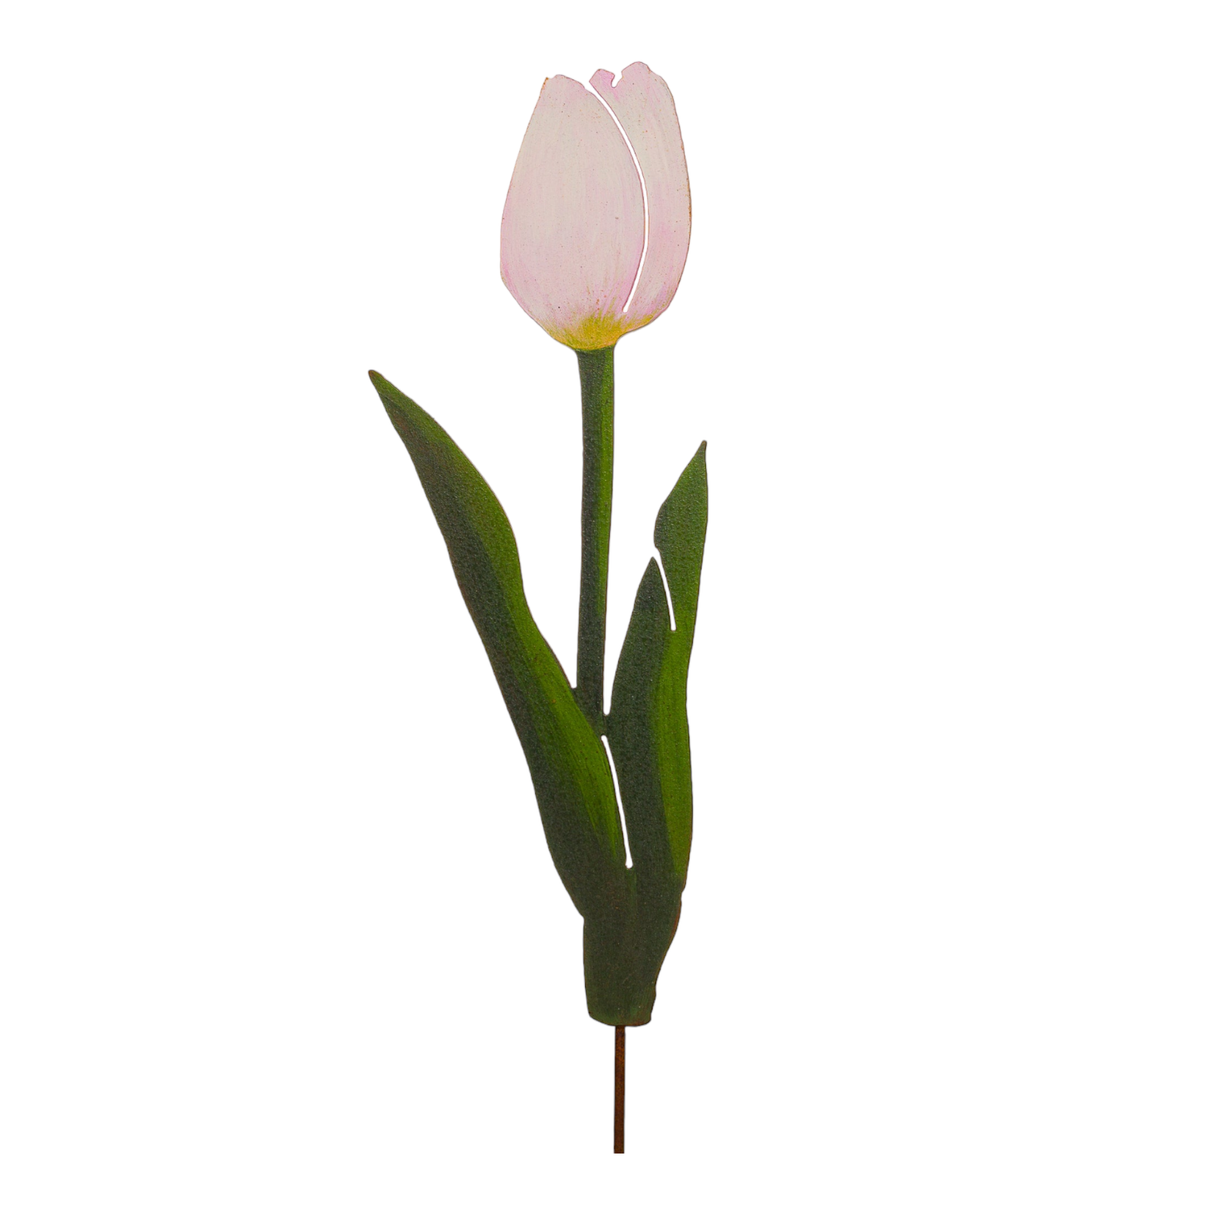 Emperor Tulip - White or Yellow